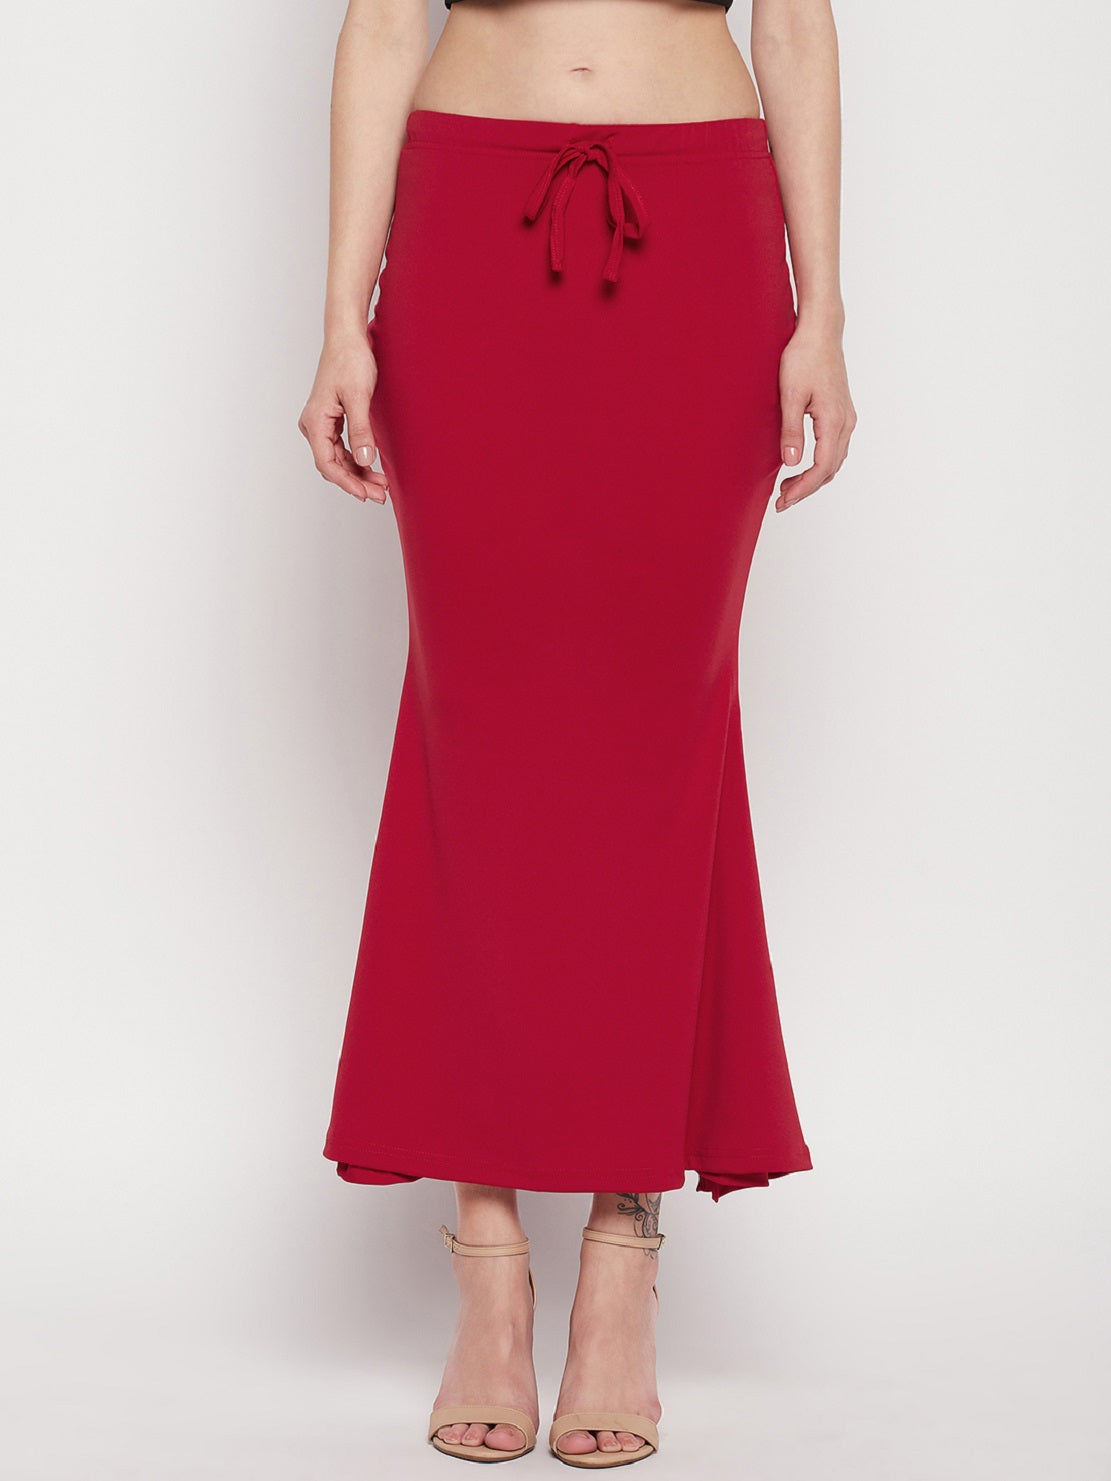 Trendmalls Red Lycra Spandex Saree Shapewear Petticoat for Women